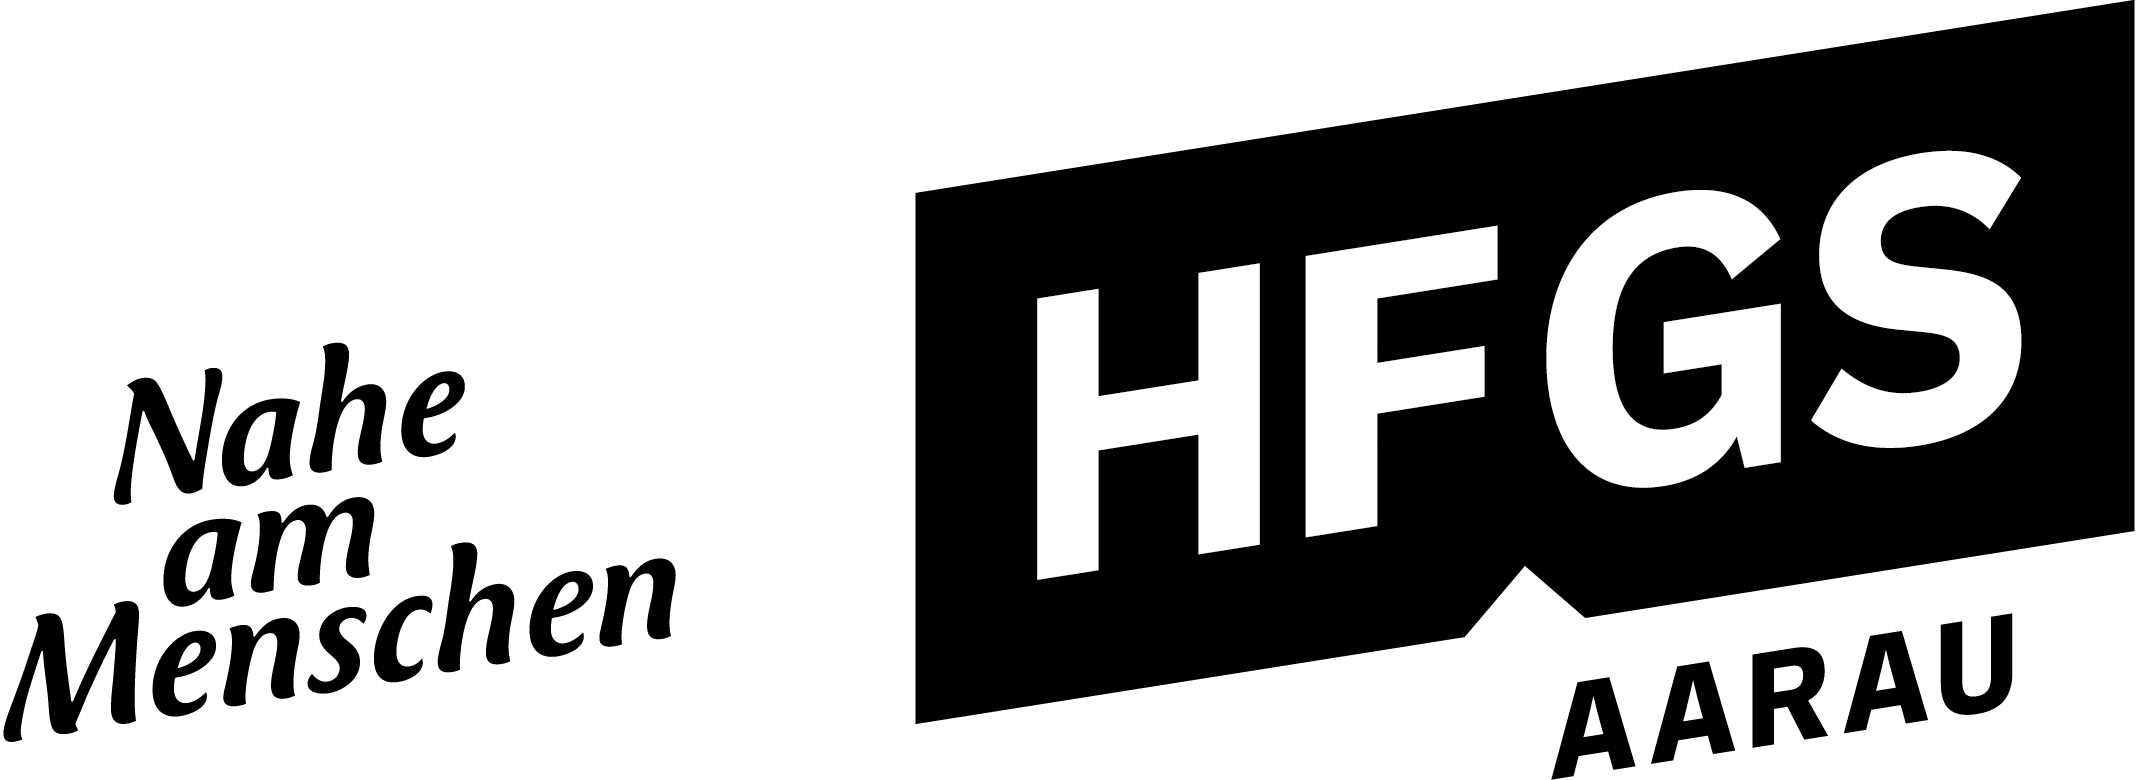 Hfgs Logo Mit Claim